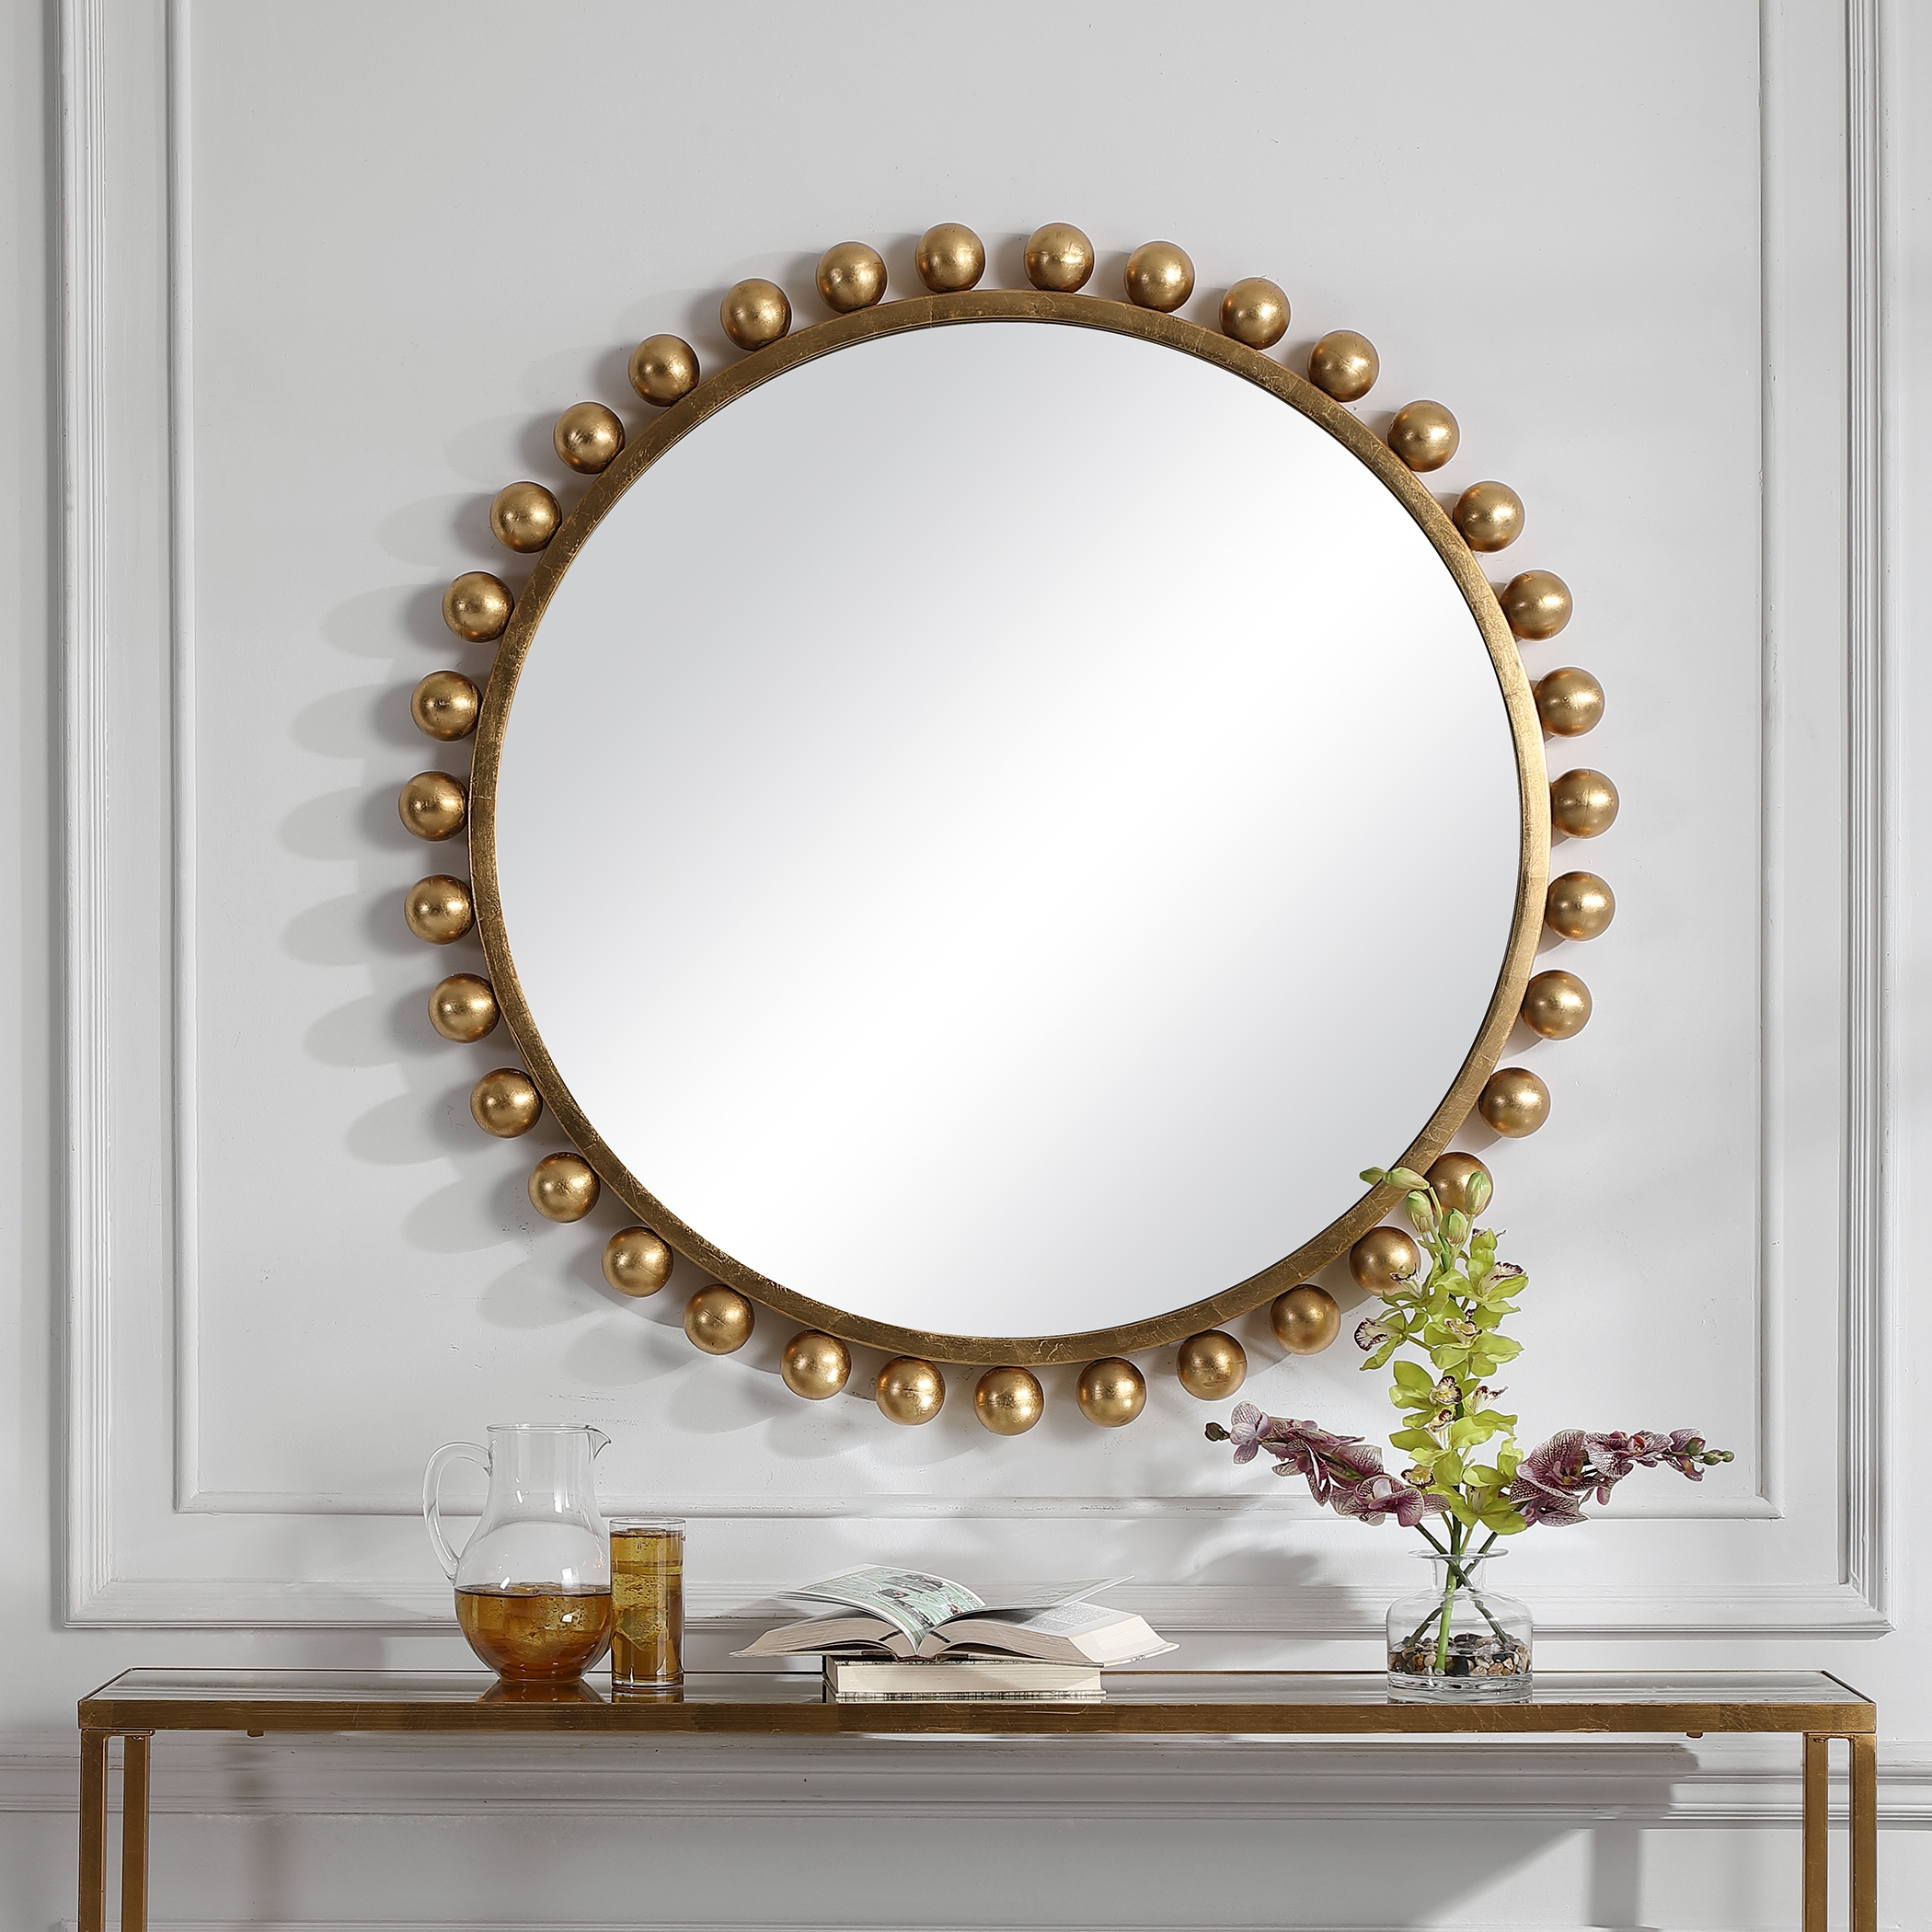 Cyra Round Mirror, Gold - Image 3